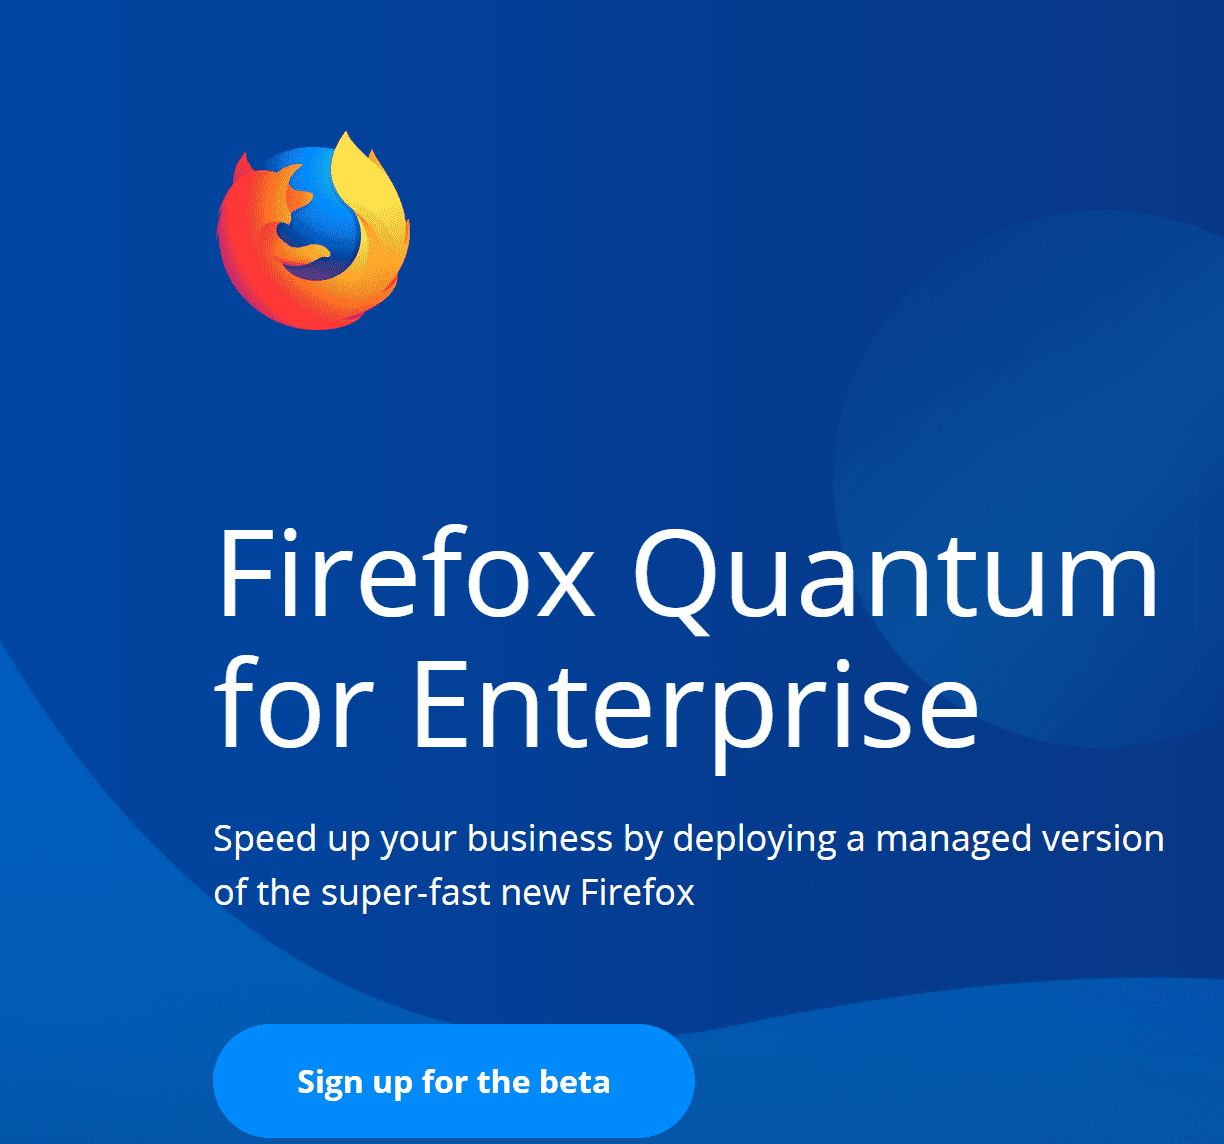 Firefox Quantum for Enterprise